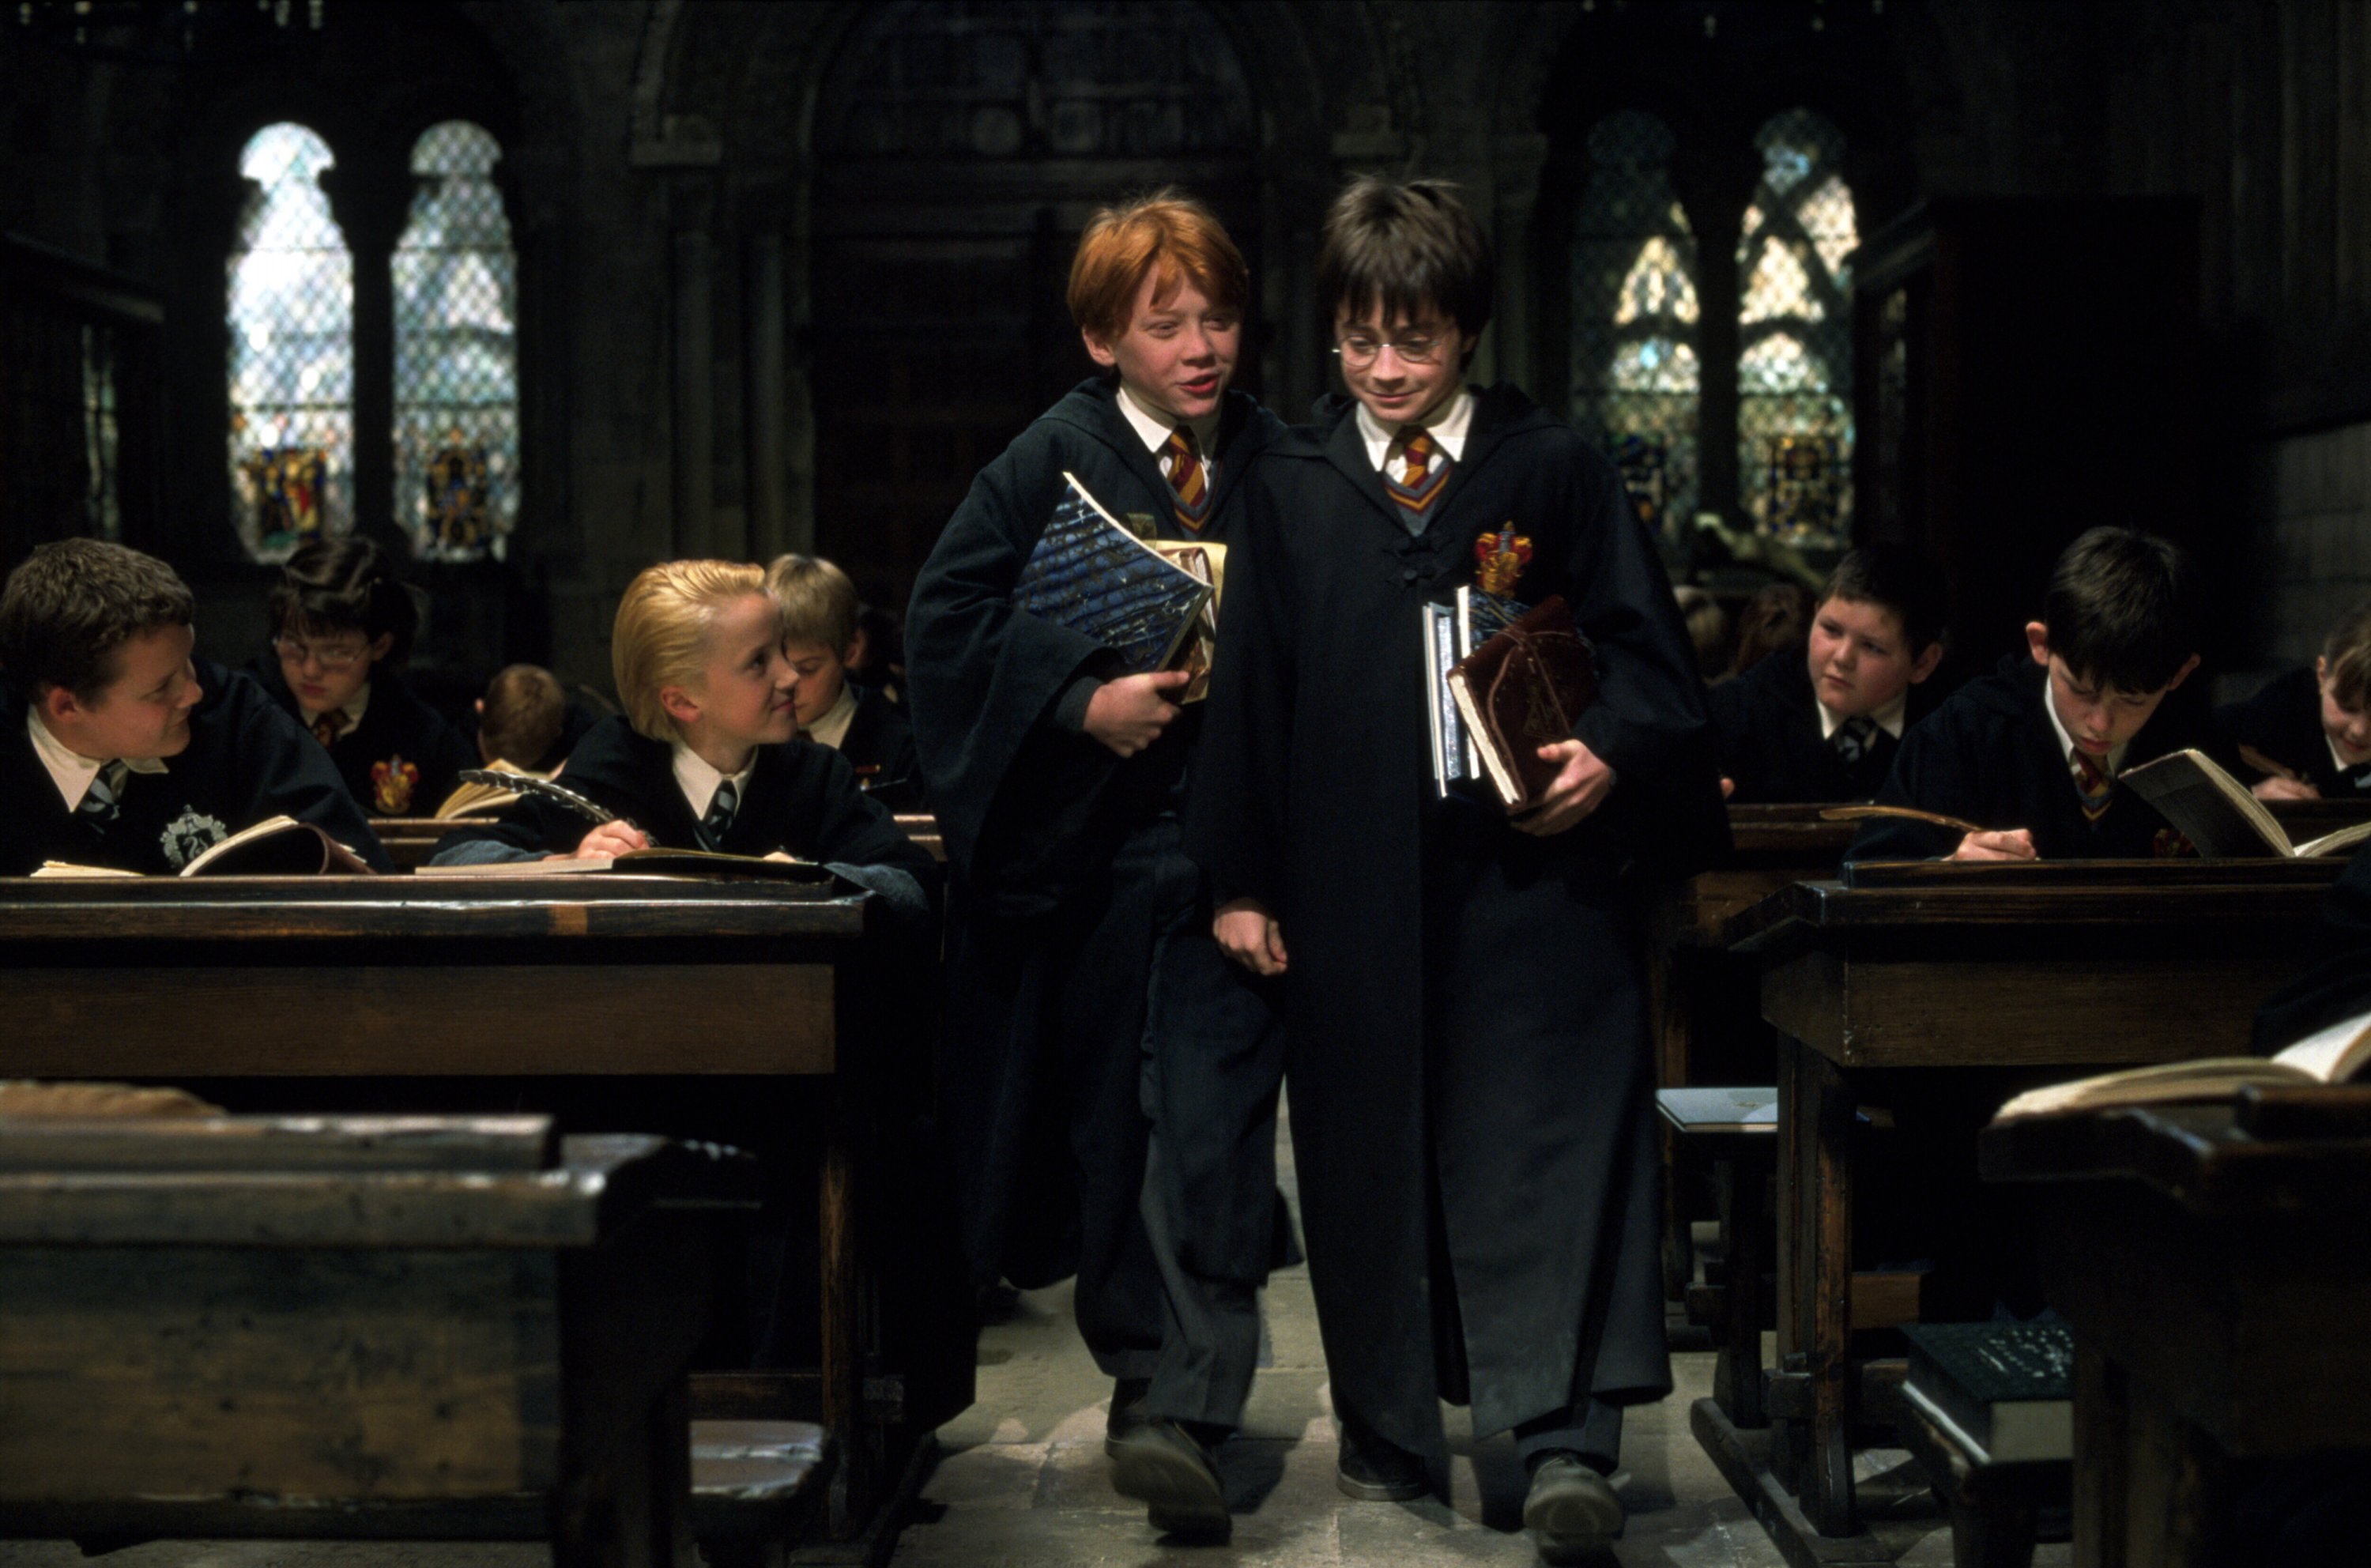 Harry Potter Scene Background